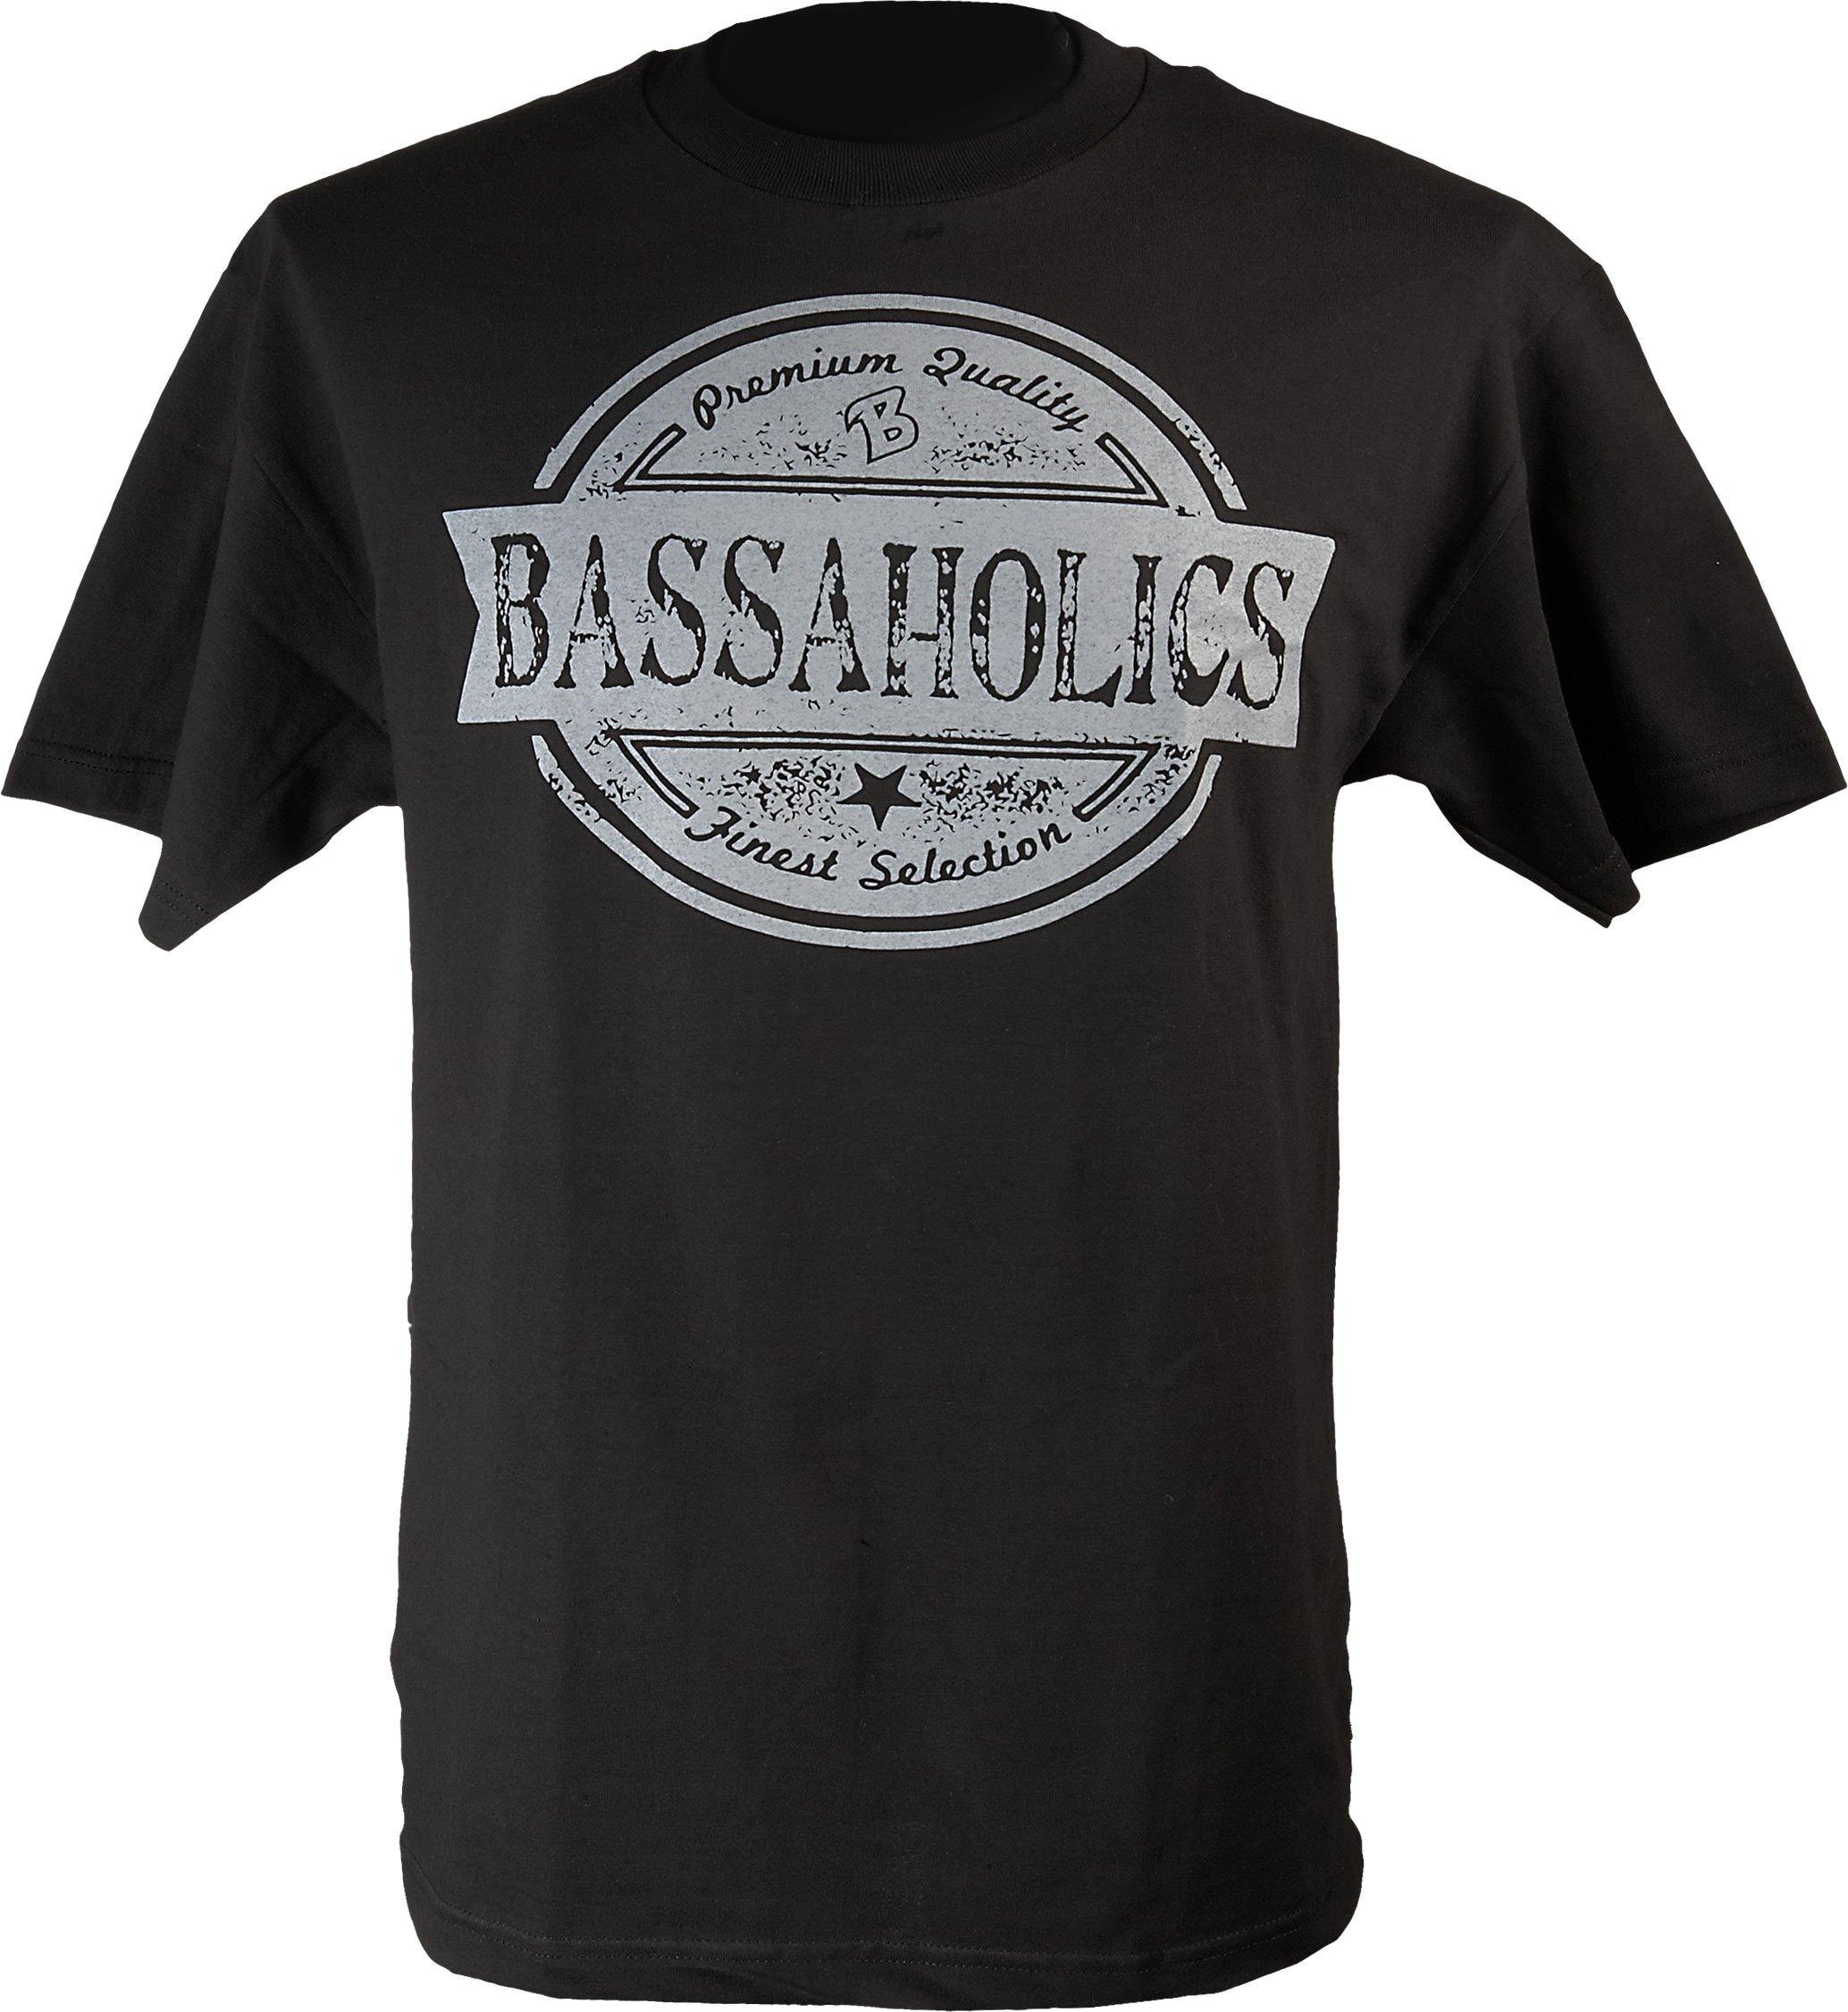 B America Bass Fishing T-Shirt – Bassaholics